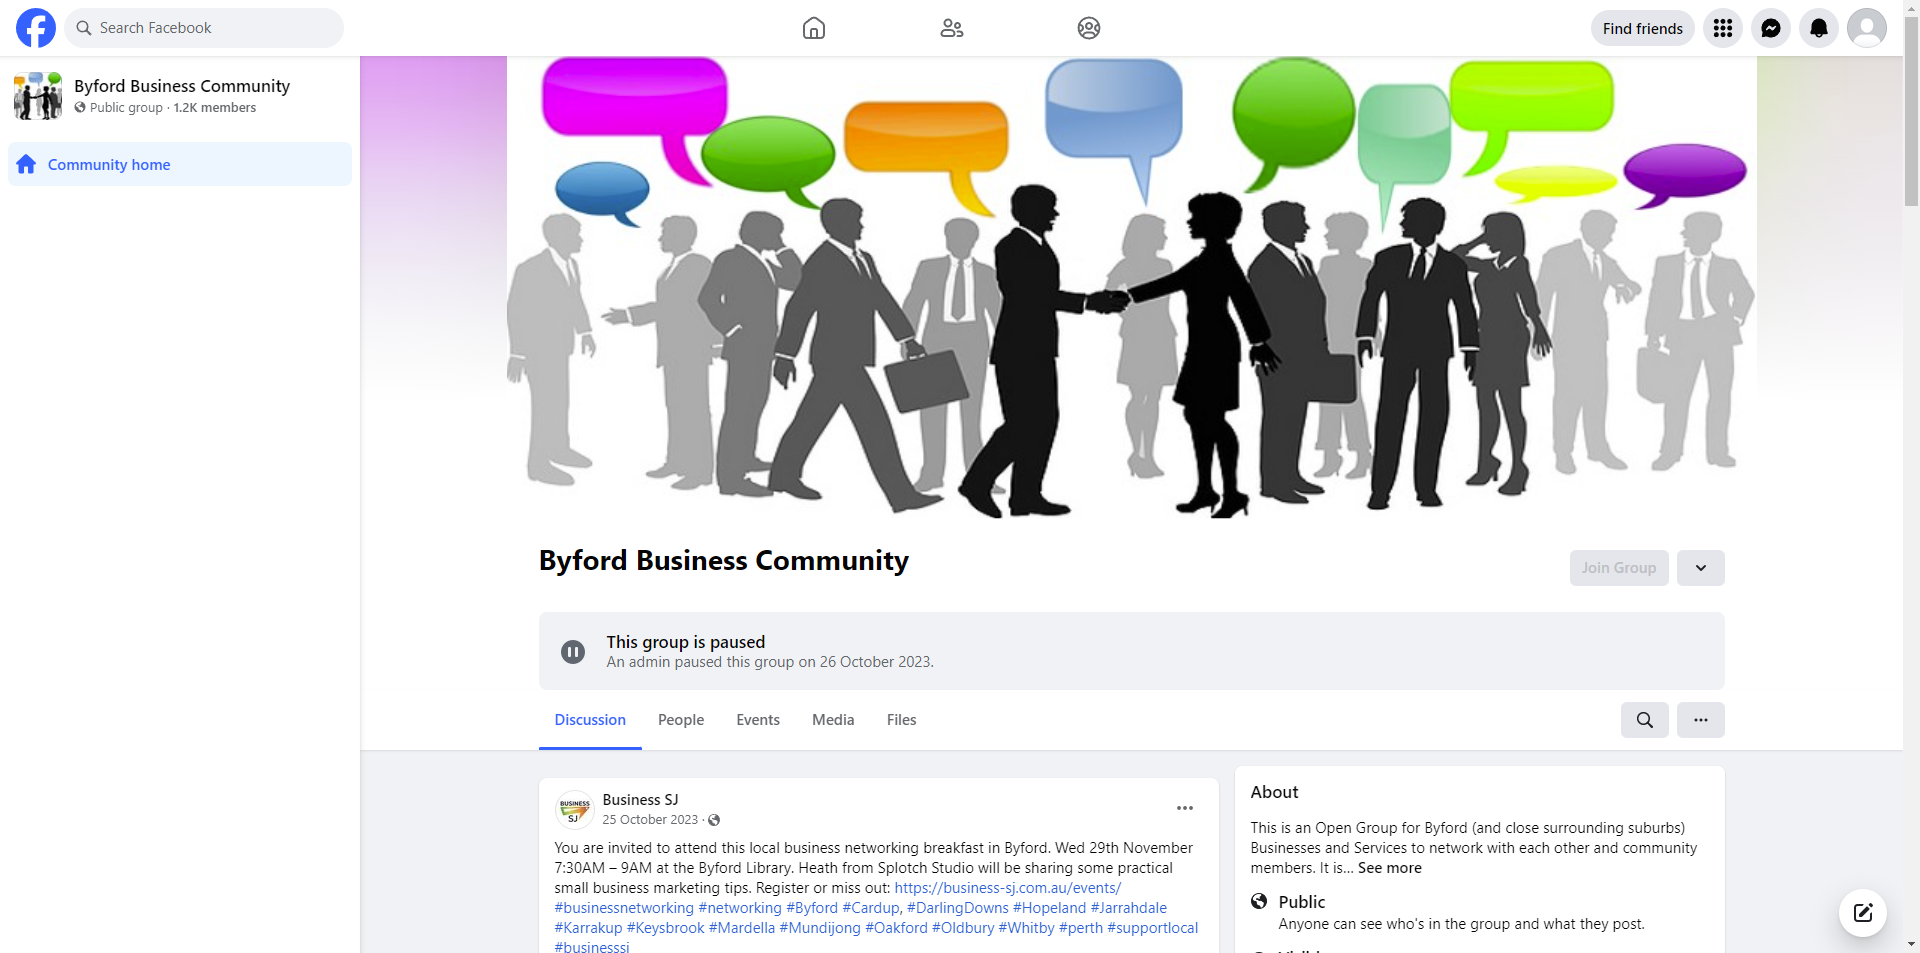 Byford Business Community